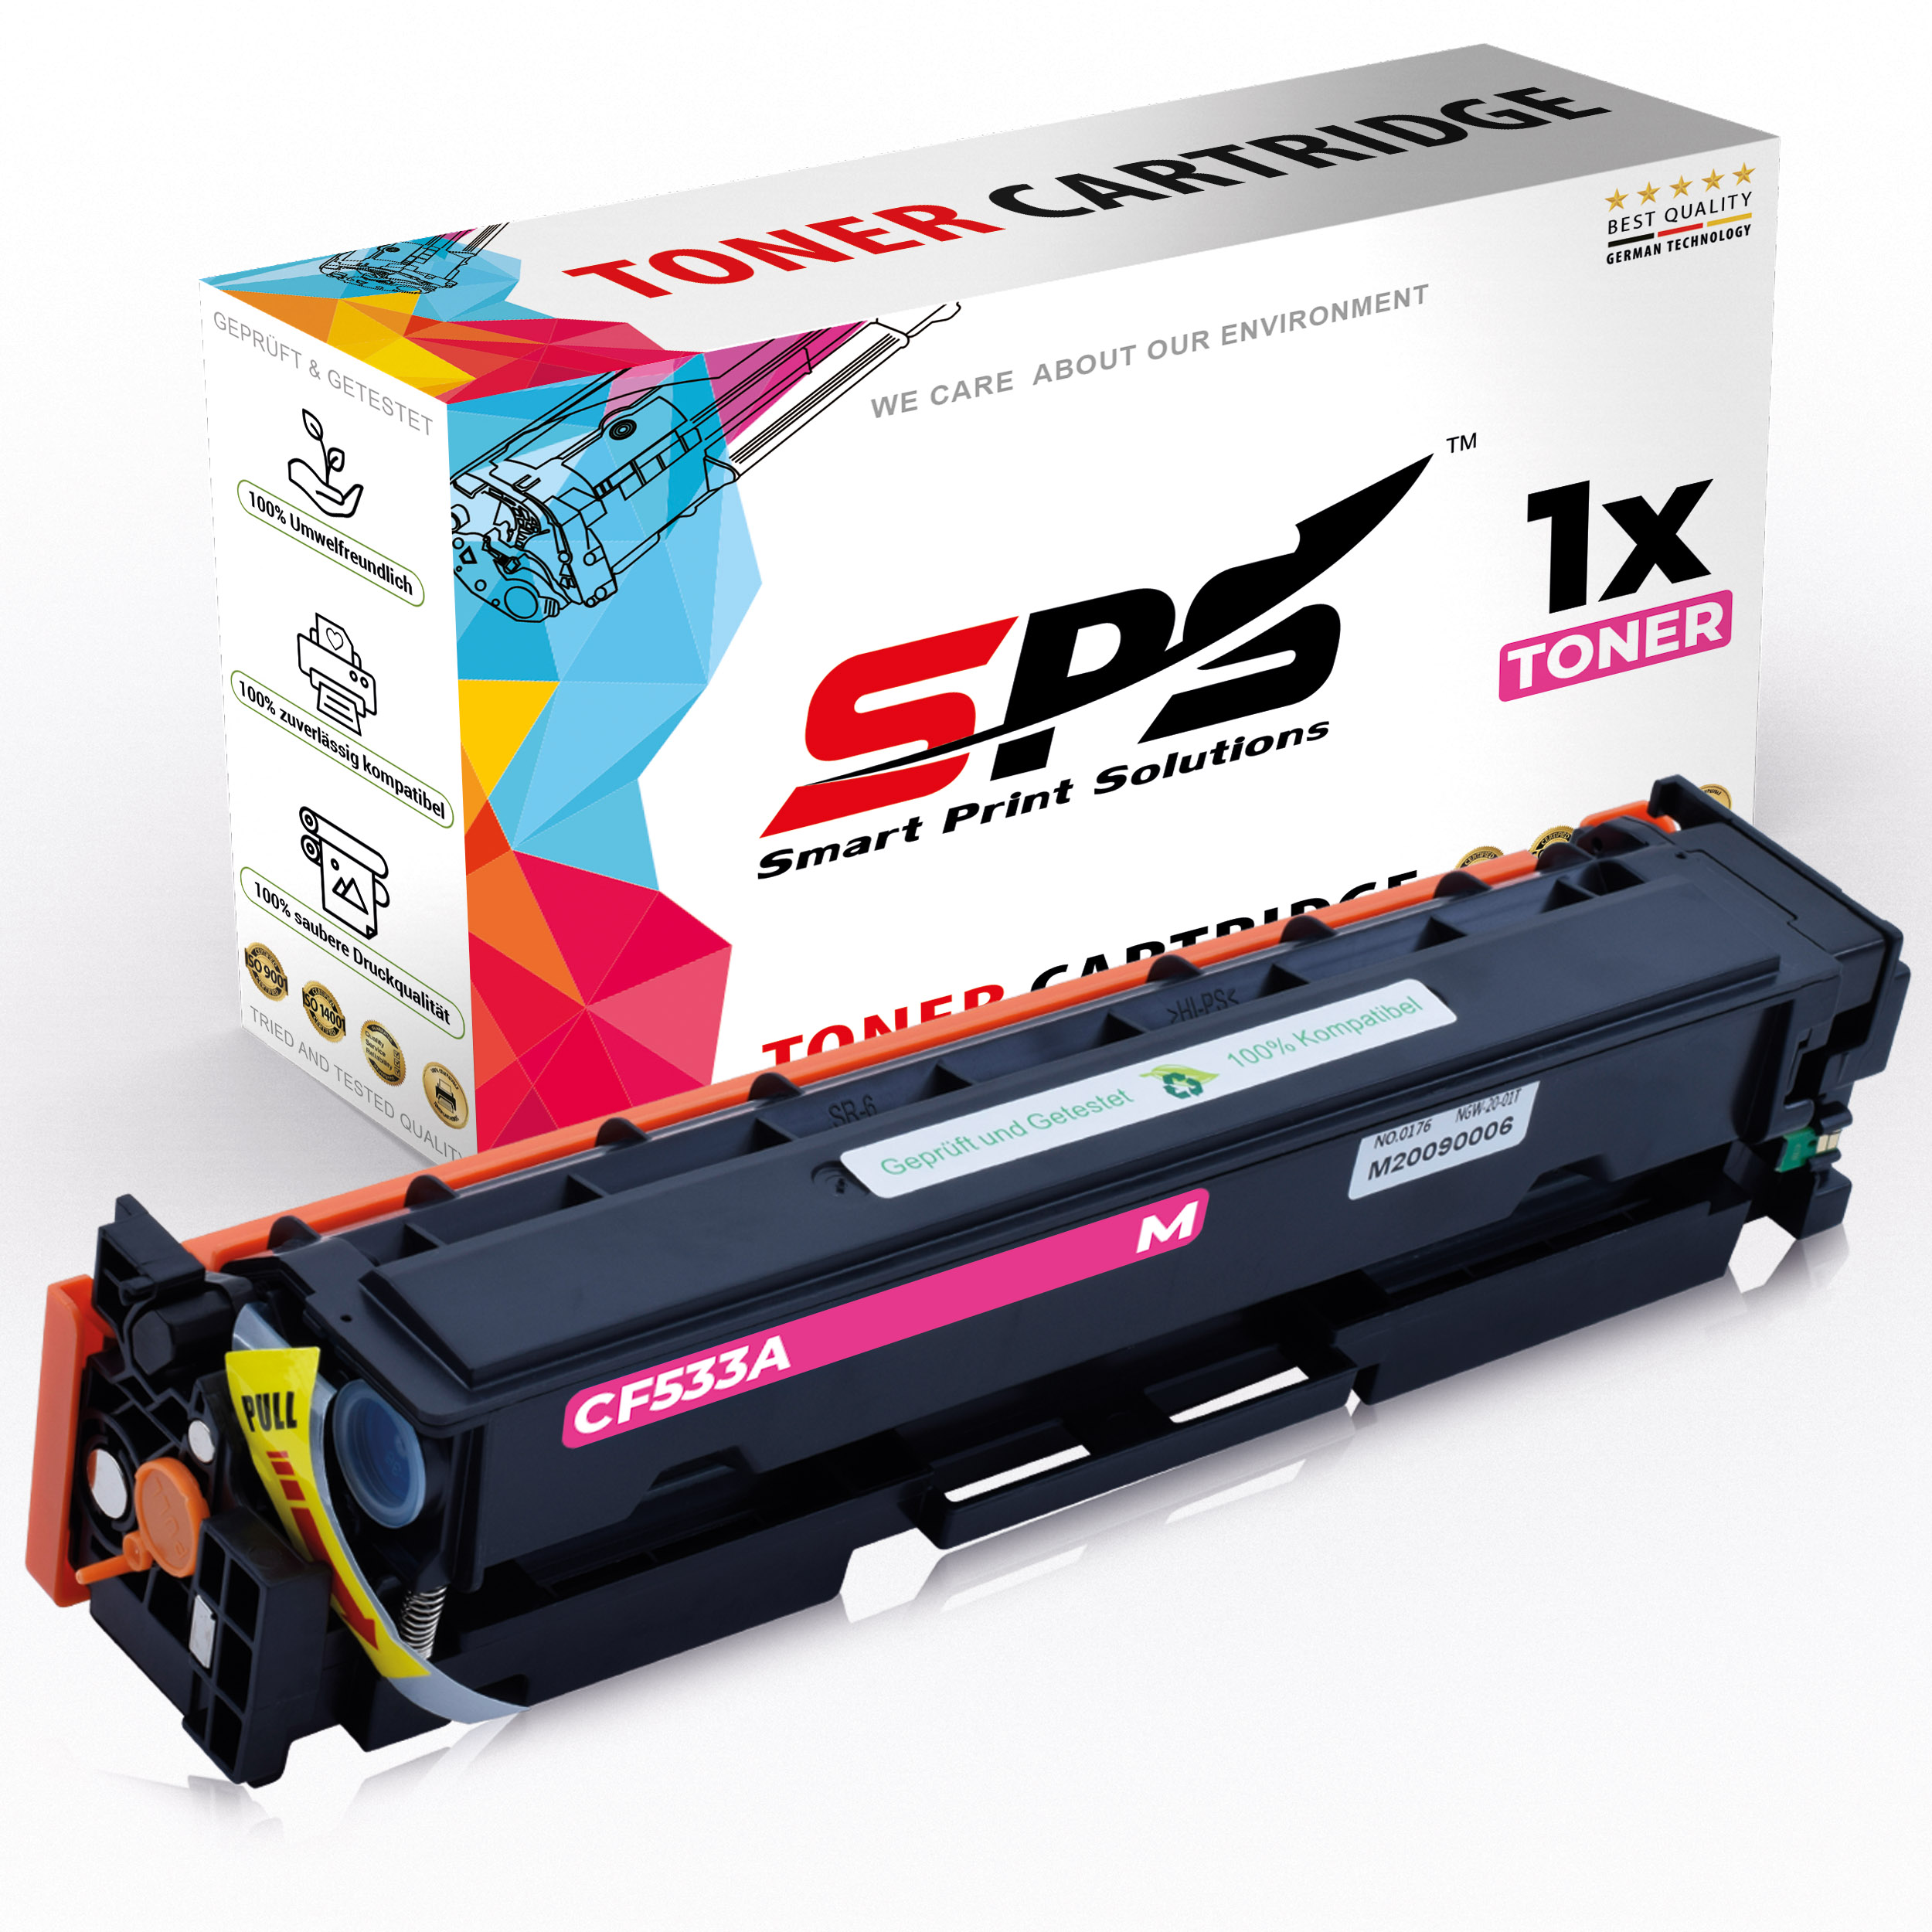 (205A MFP SPS Laserjet Pro CF533A S-16650 M180) / Toner Magenta Color